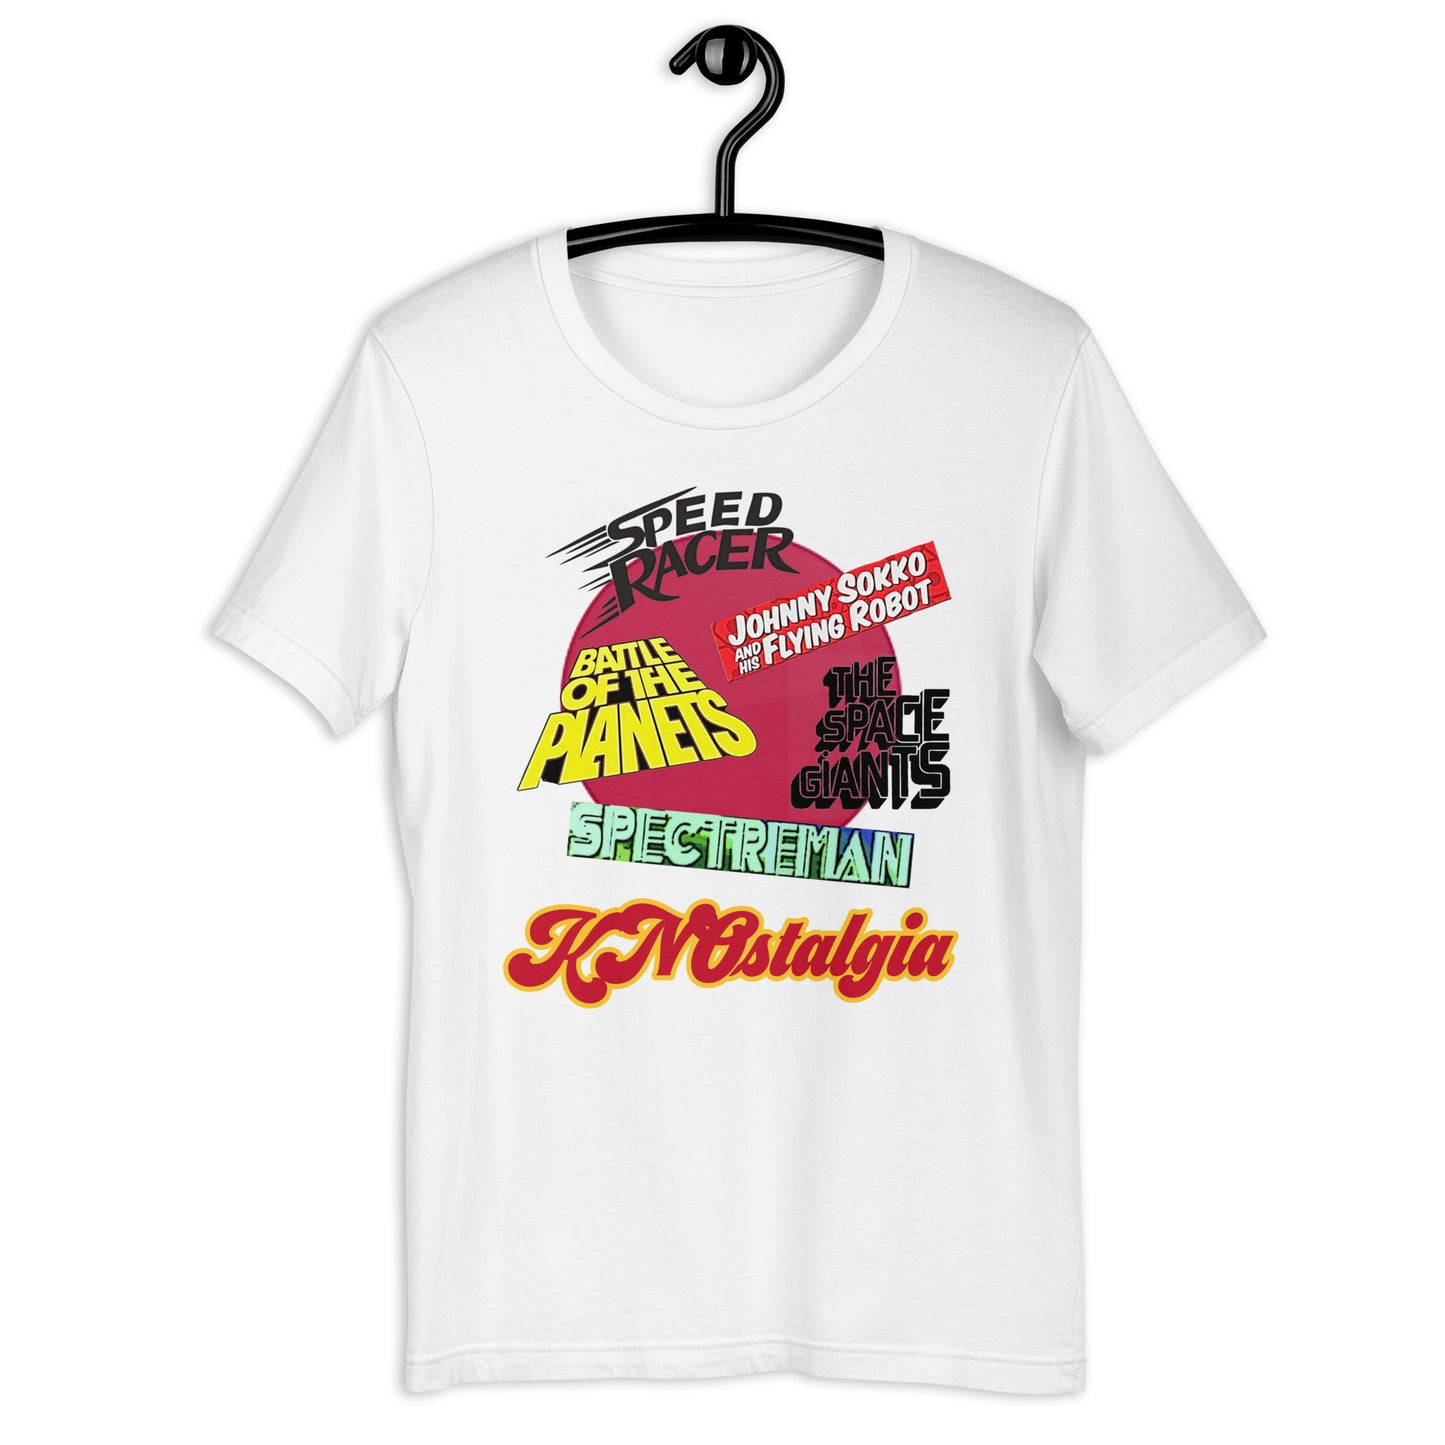 KNOstalgia - Afterschool - Unisex t-shirt